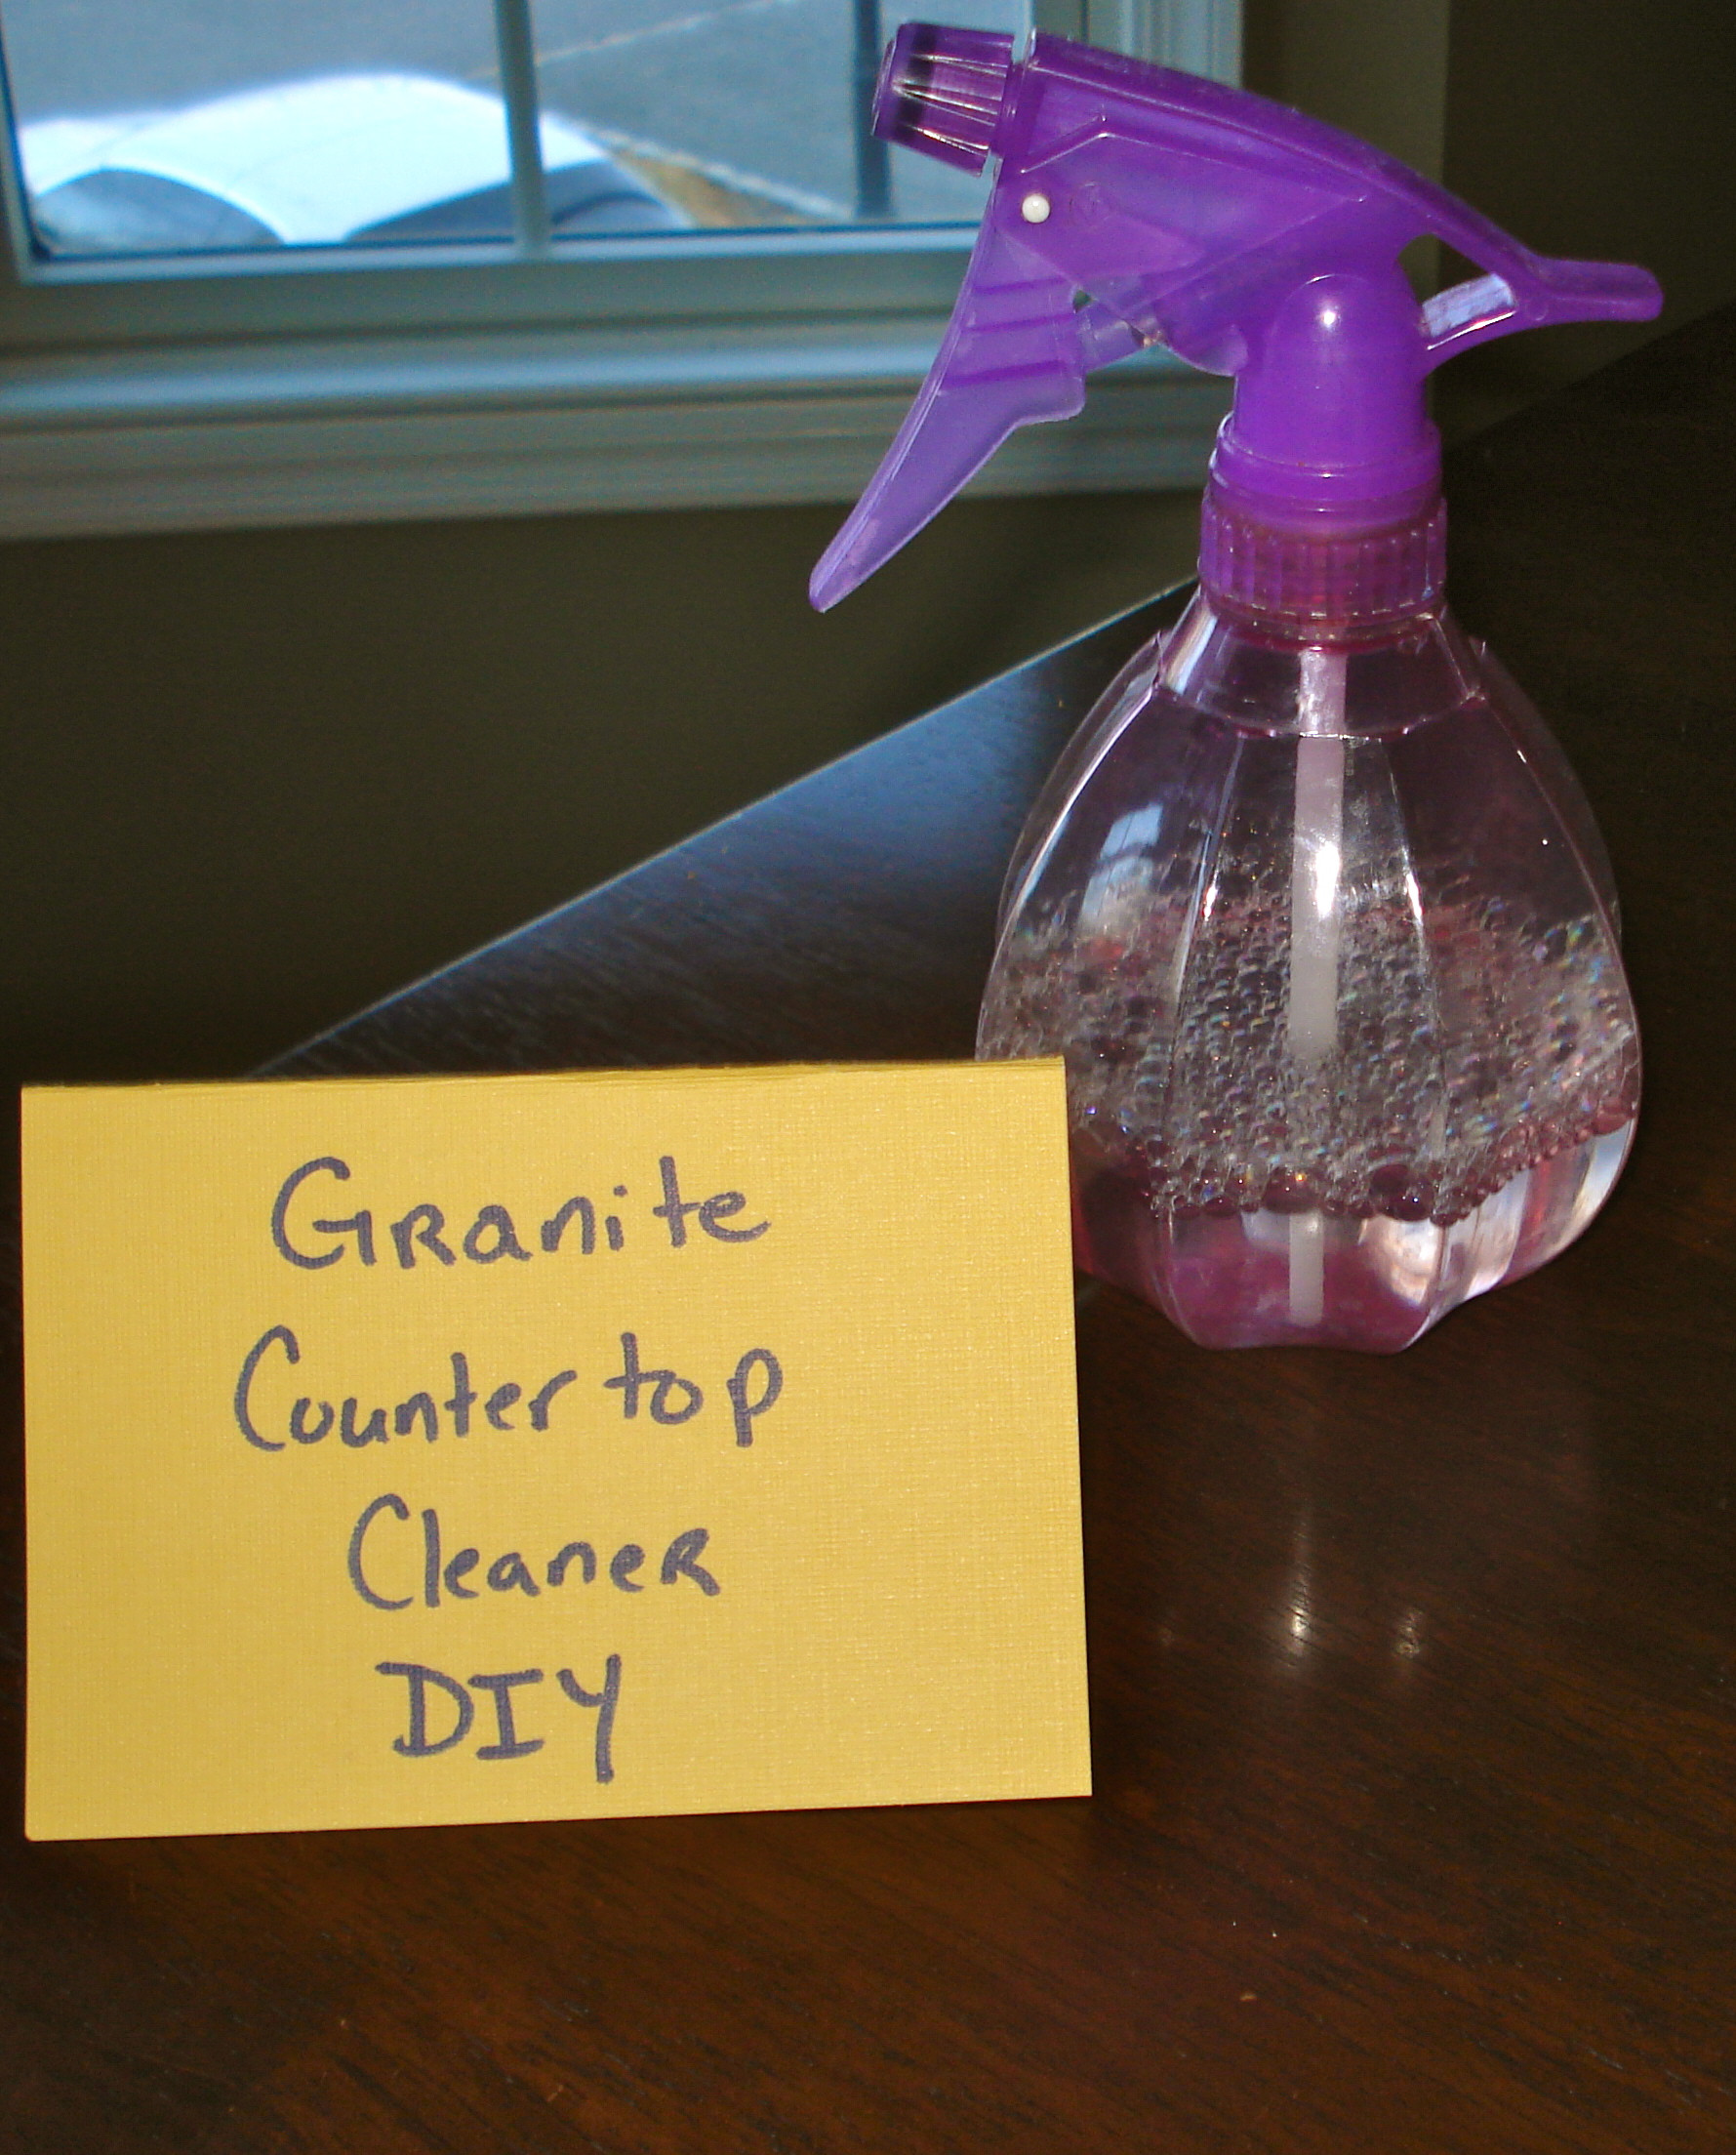 Best ideas about DIY Granite Cleaner
. Save or Pin DIY Granite Countertop Cleaner Now.